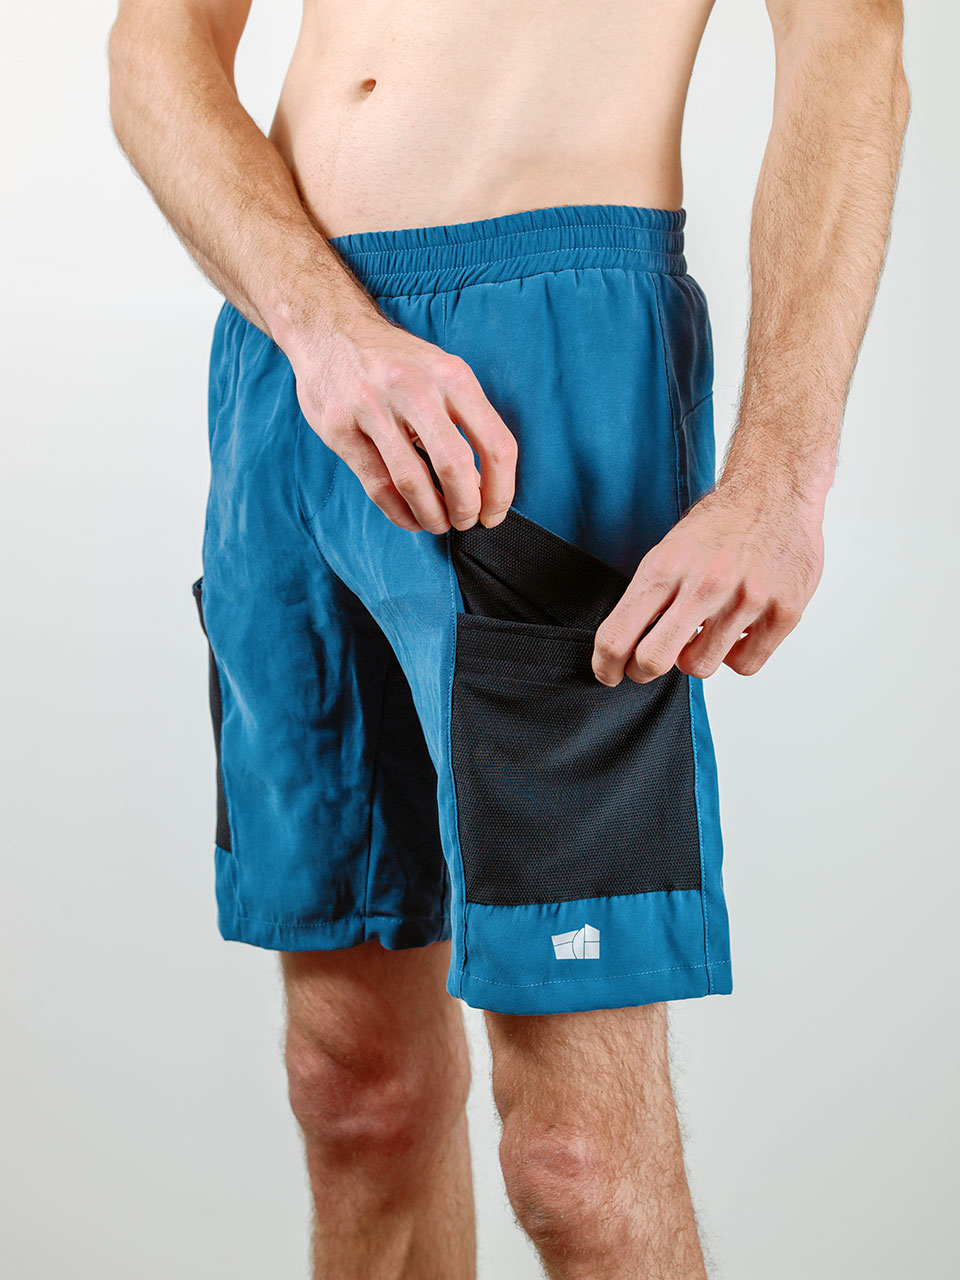 ÉCH Apparel - Climbing shorts for men with chalk insert